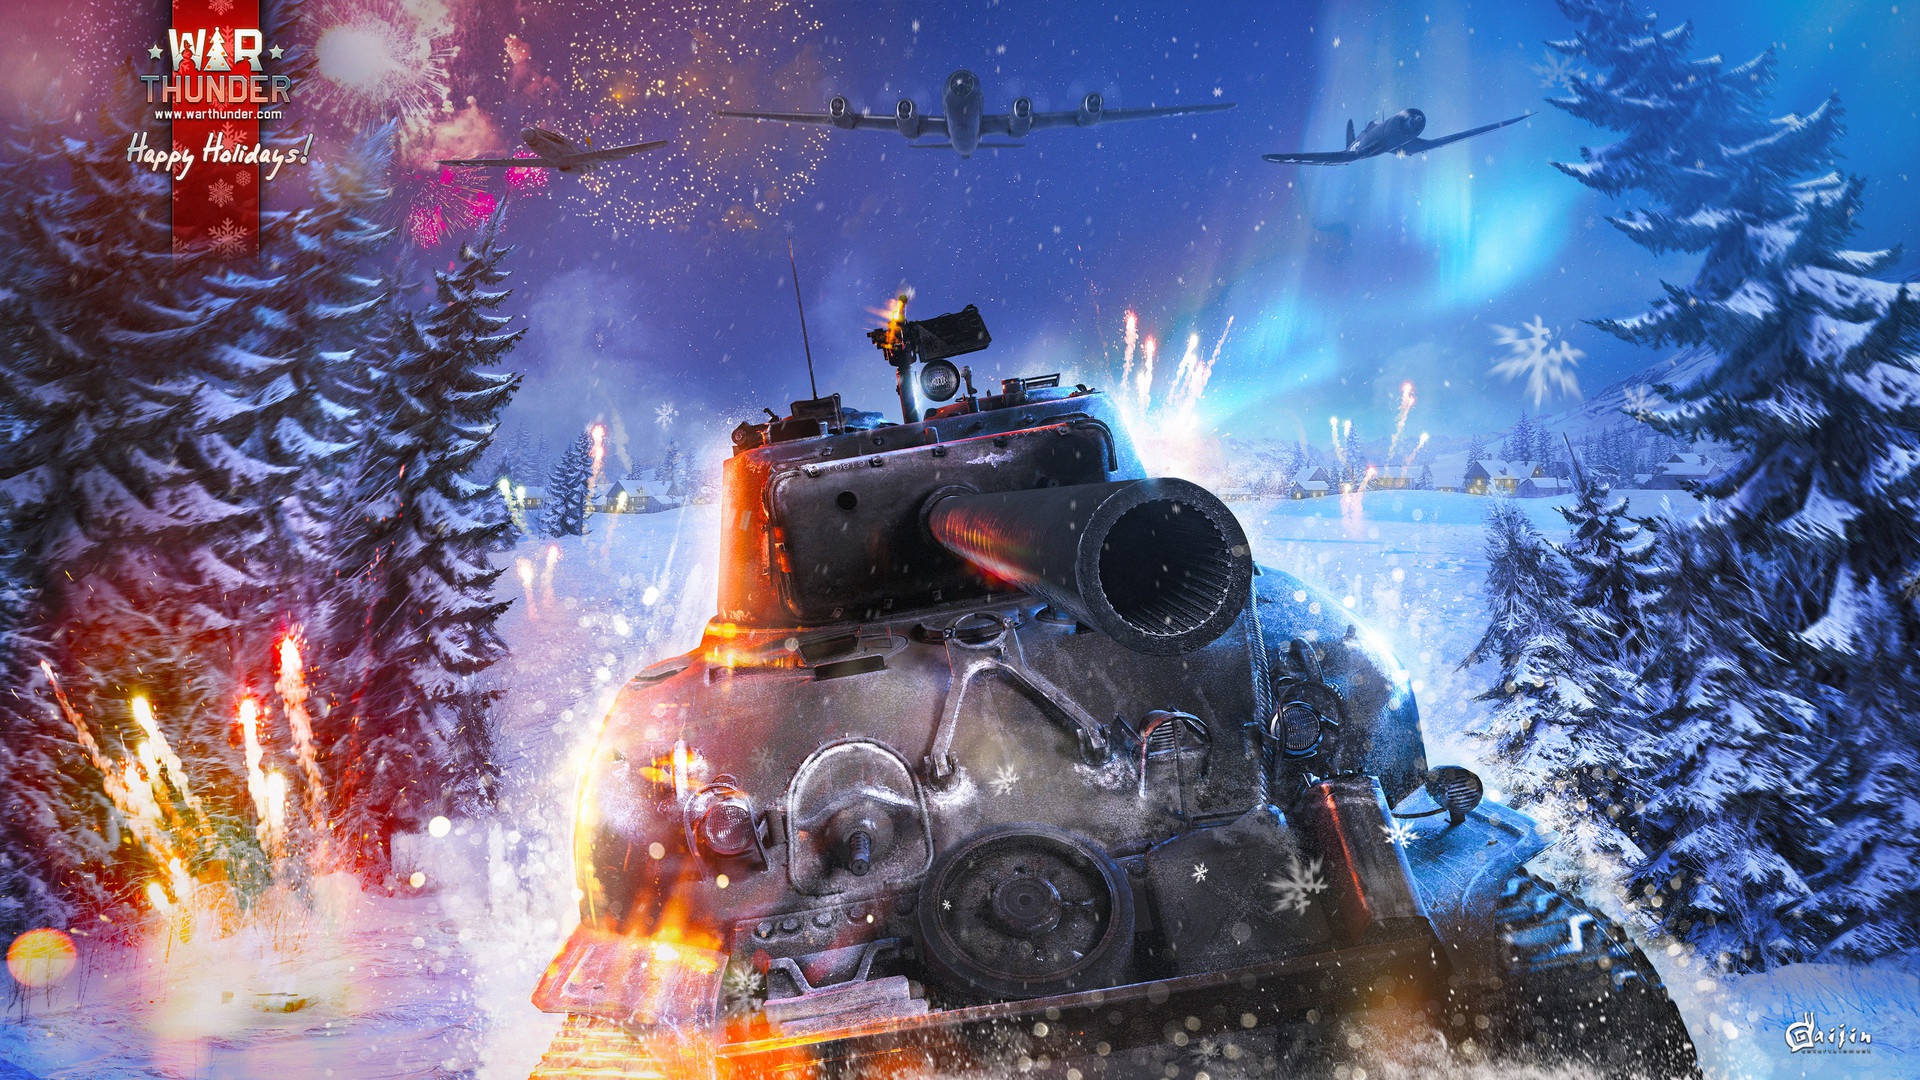 General 1920x1080 video games video game art digital art War Thunder military military vehicle snow winter tank